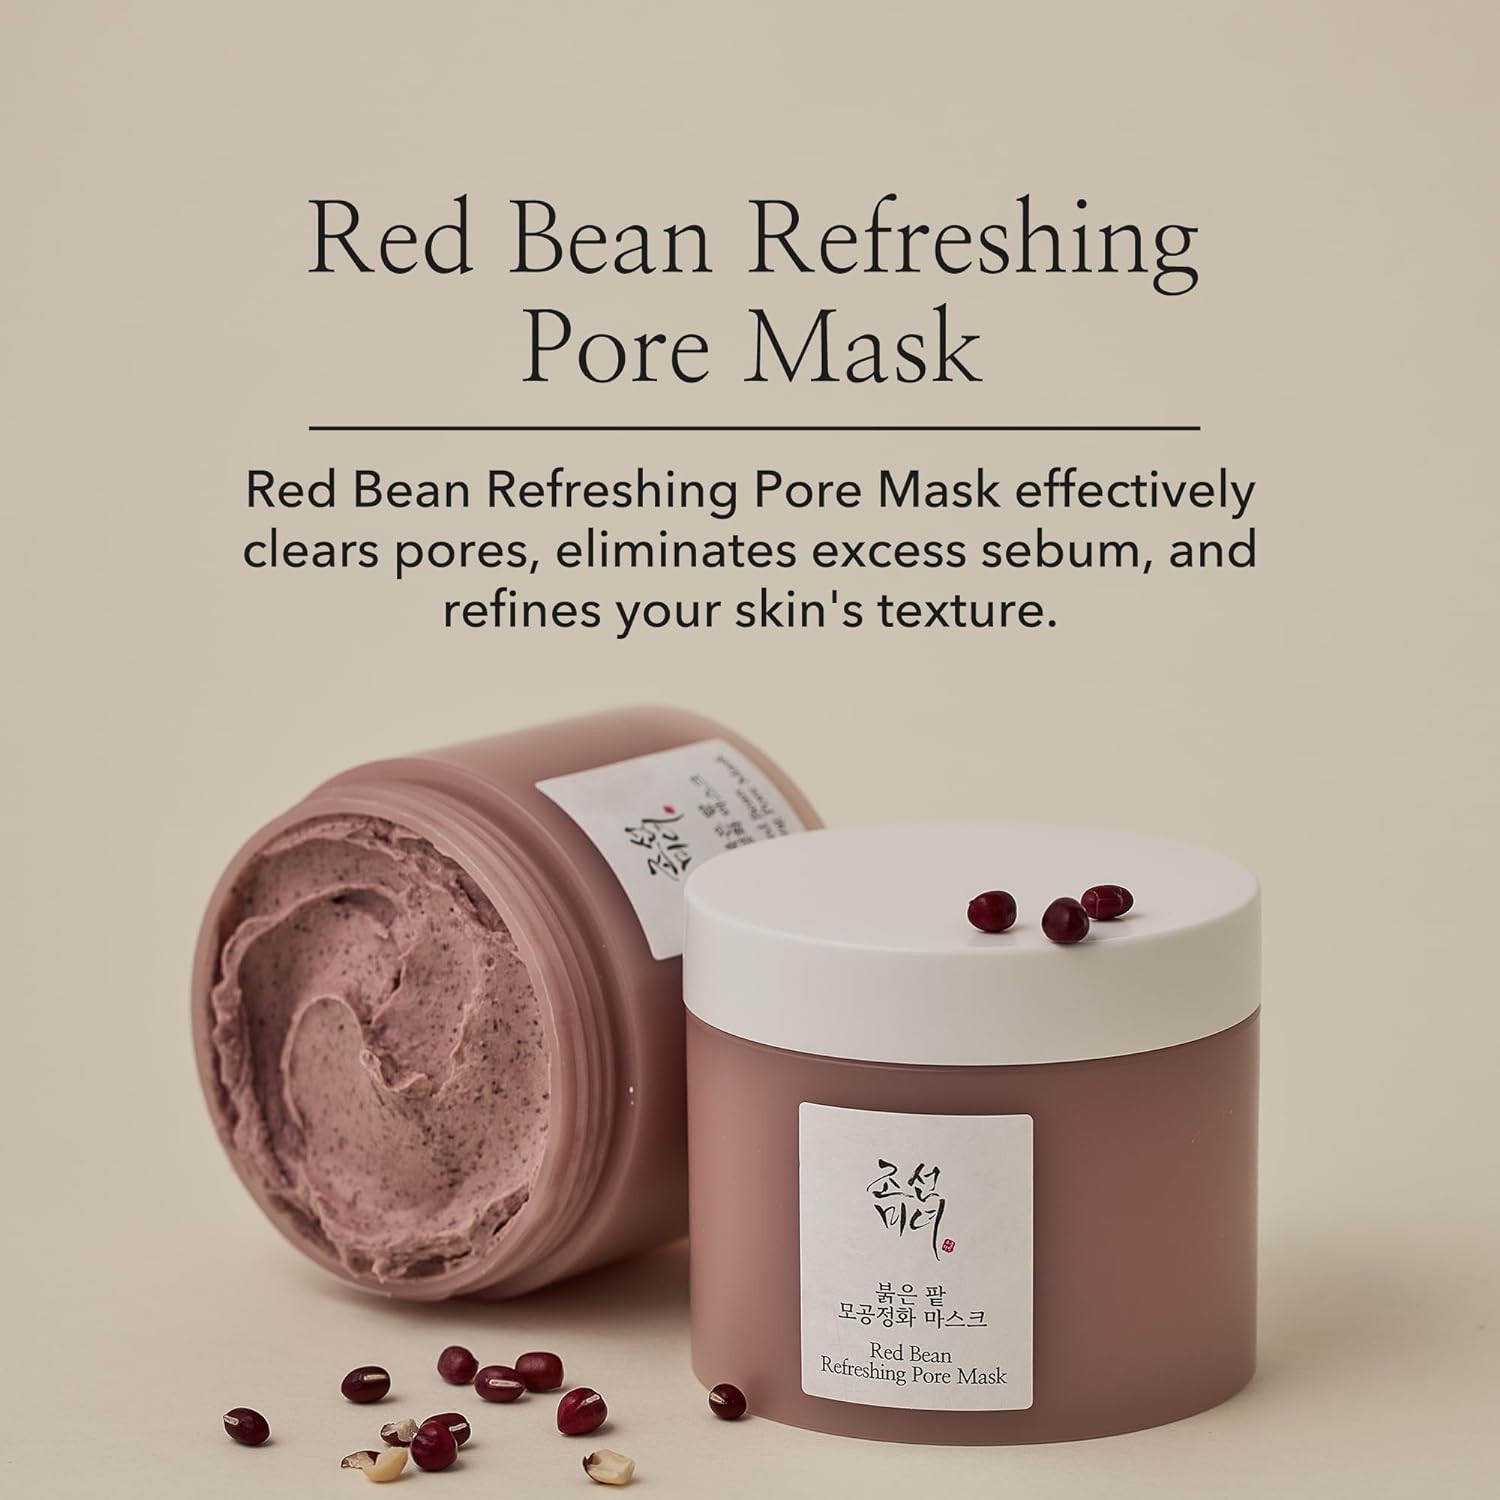 Red Bean Refreshing Pore Mask